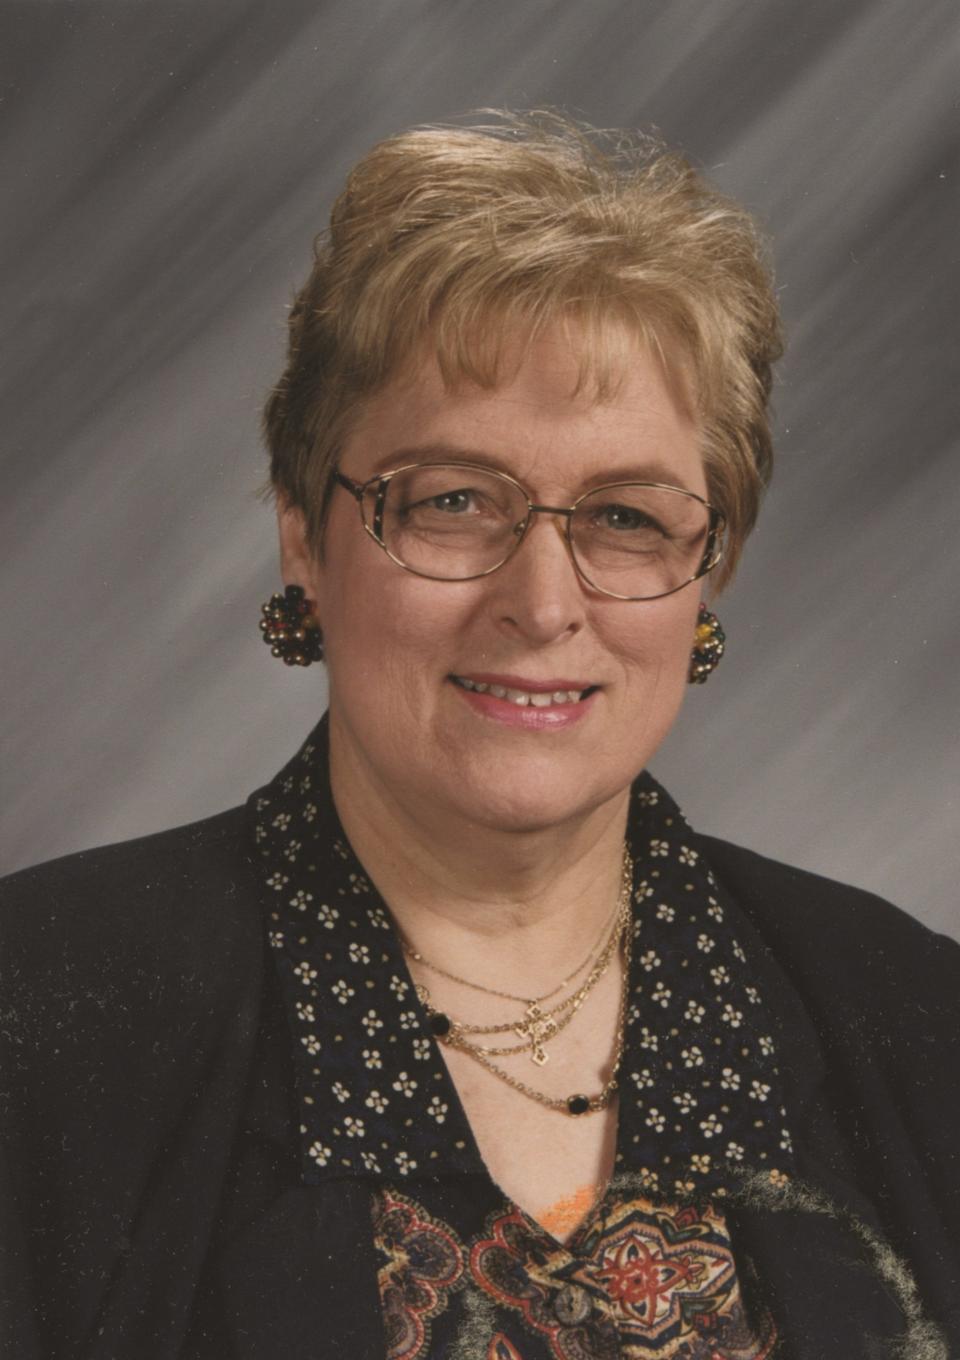 A headshot of Linda Auman